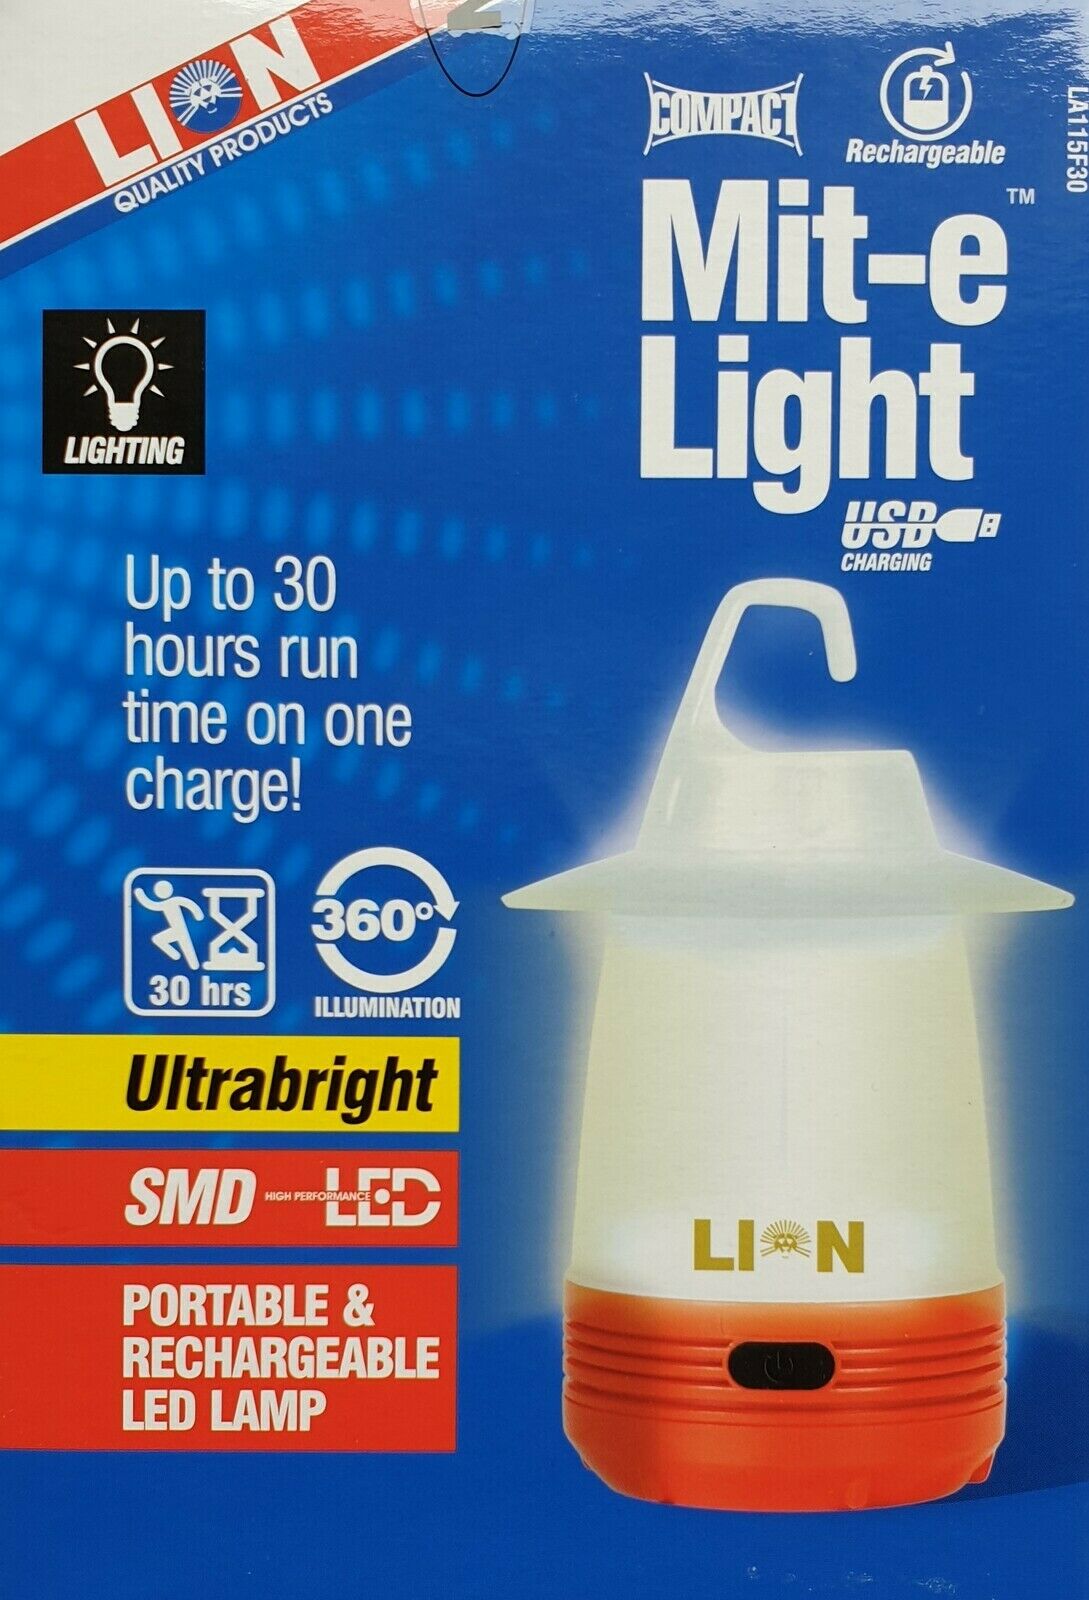 Mit-e light.jpg